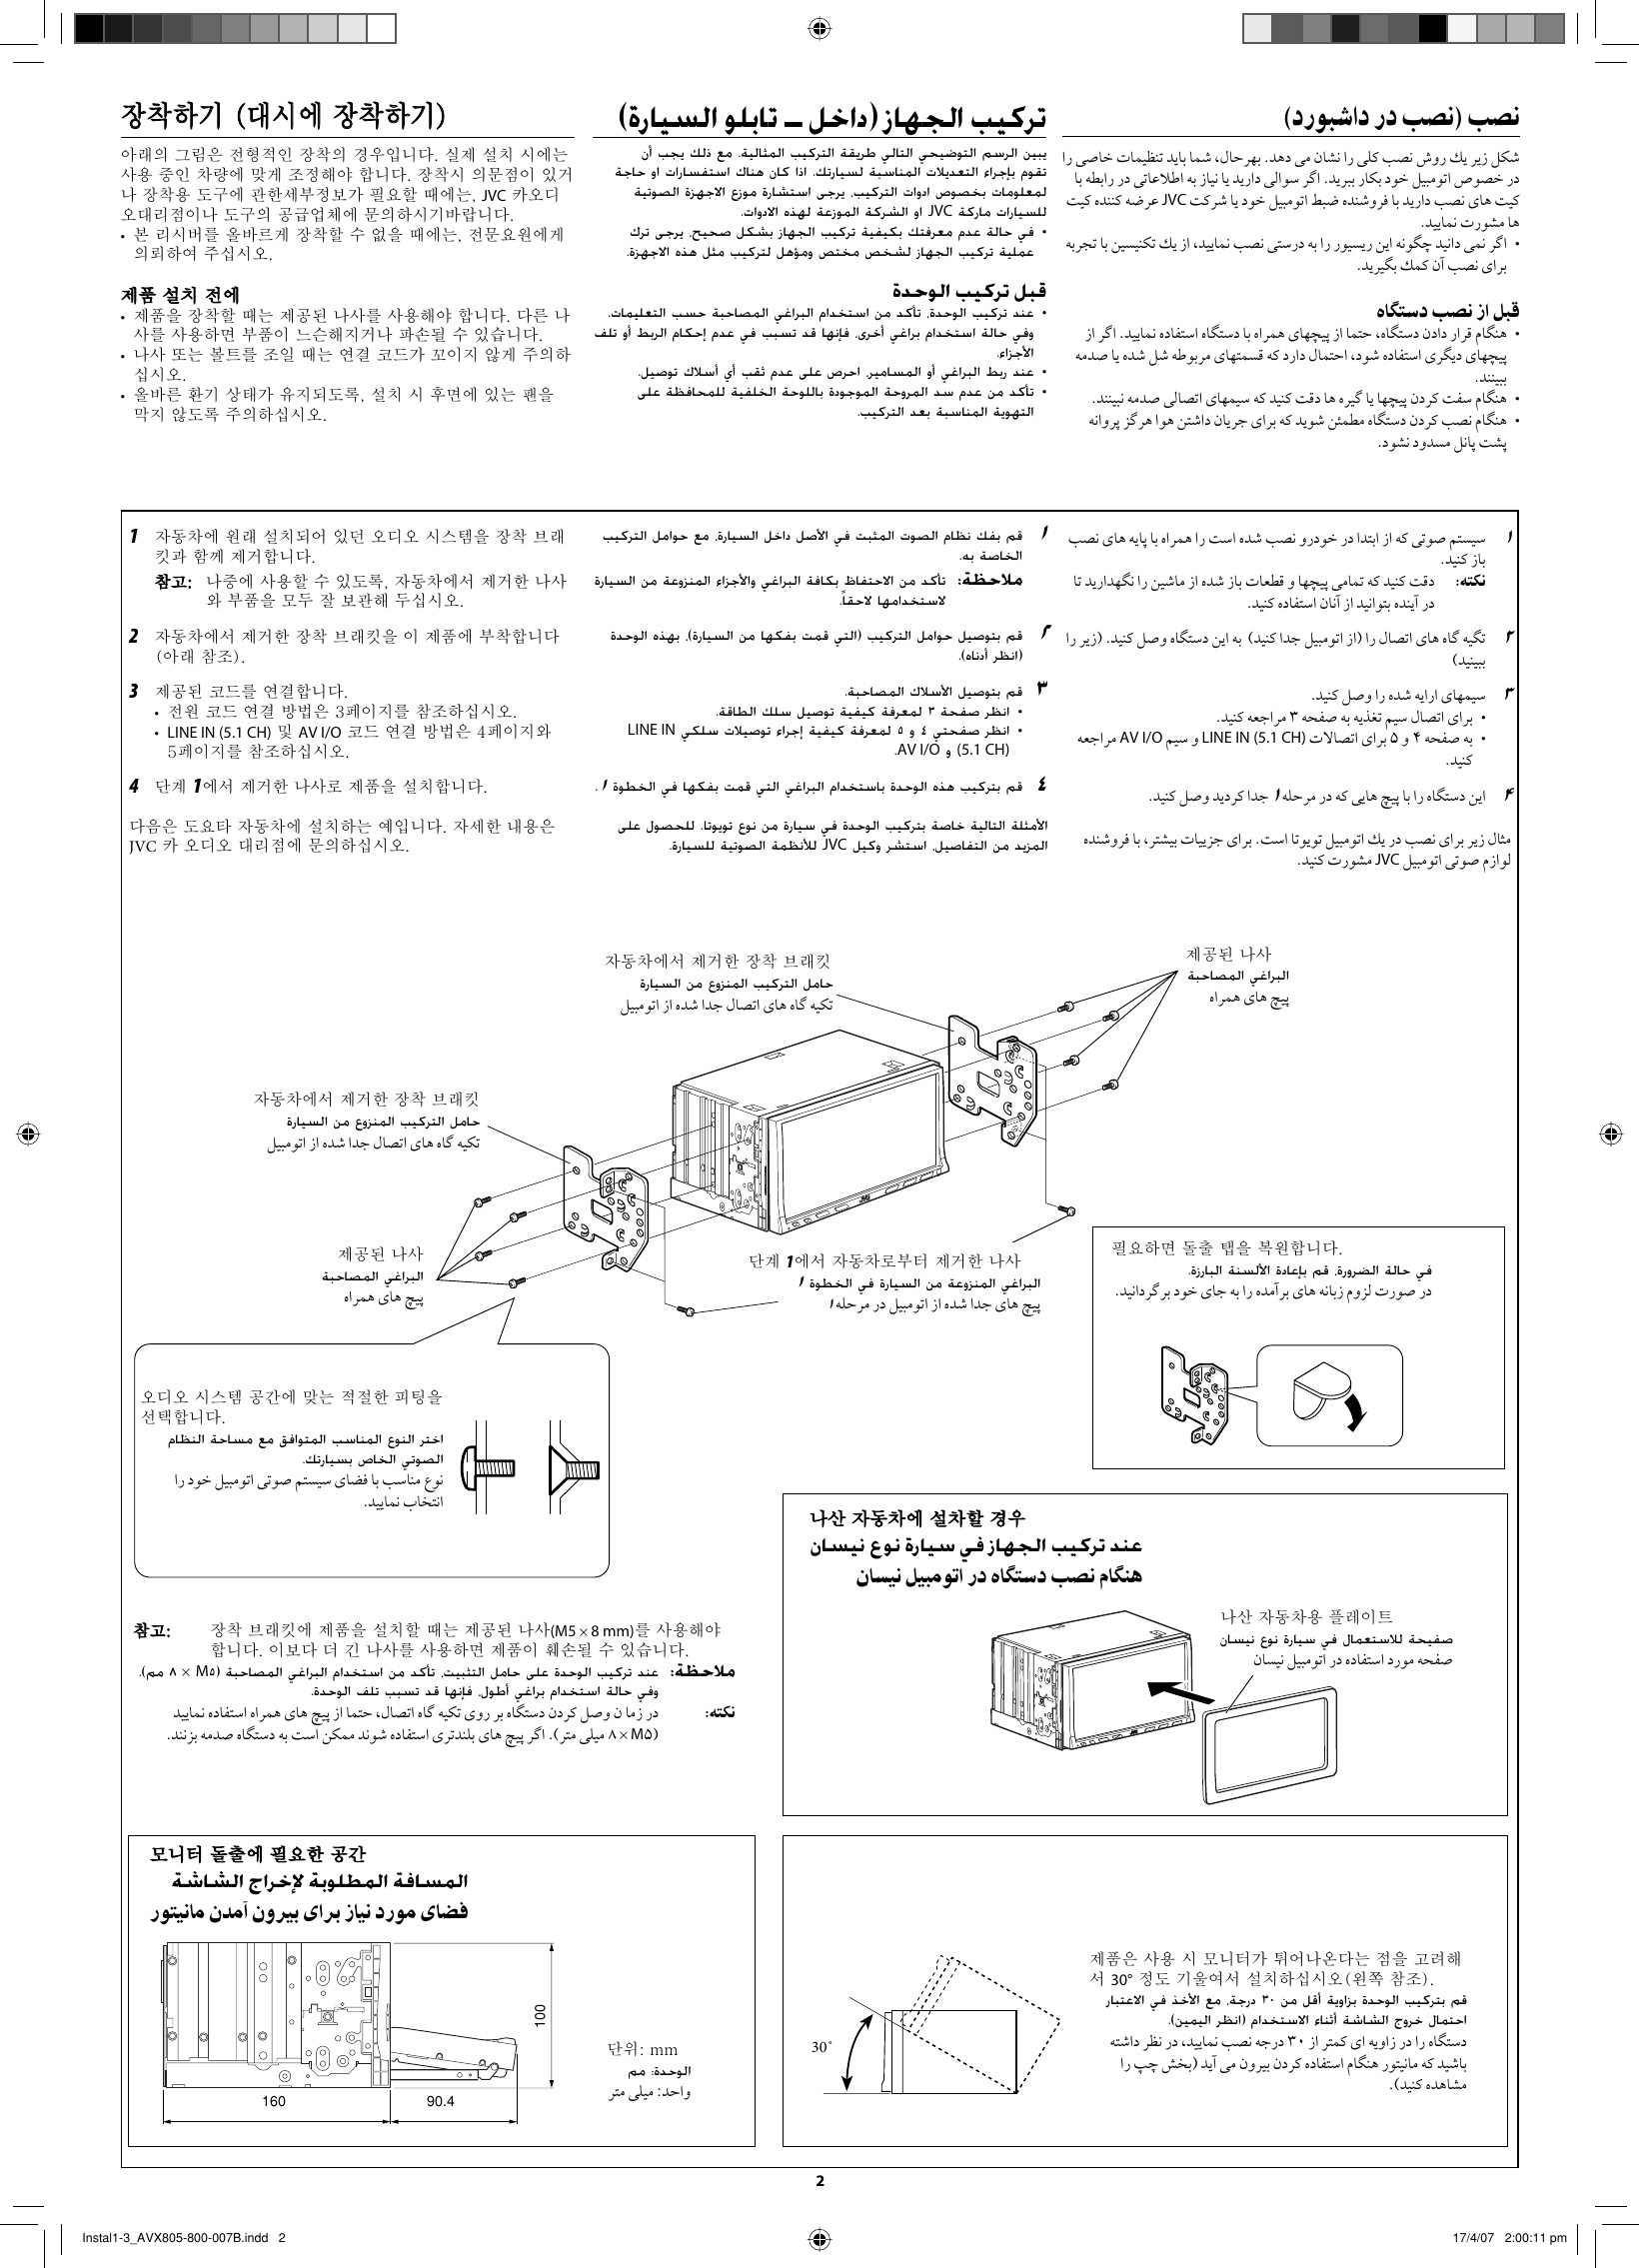 Page 2 of 6 - JVC KW-AVX800U KW-AVX805/KW-AVX800[U] User Manual INSTALLATION (Asia) LVT1667-007B